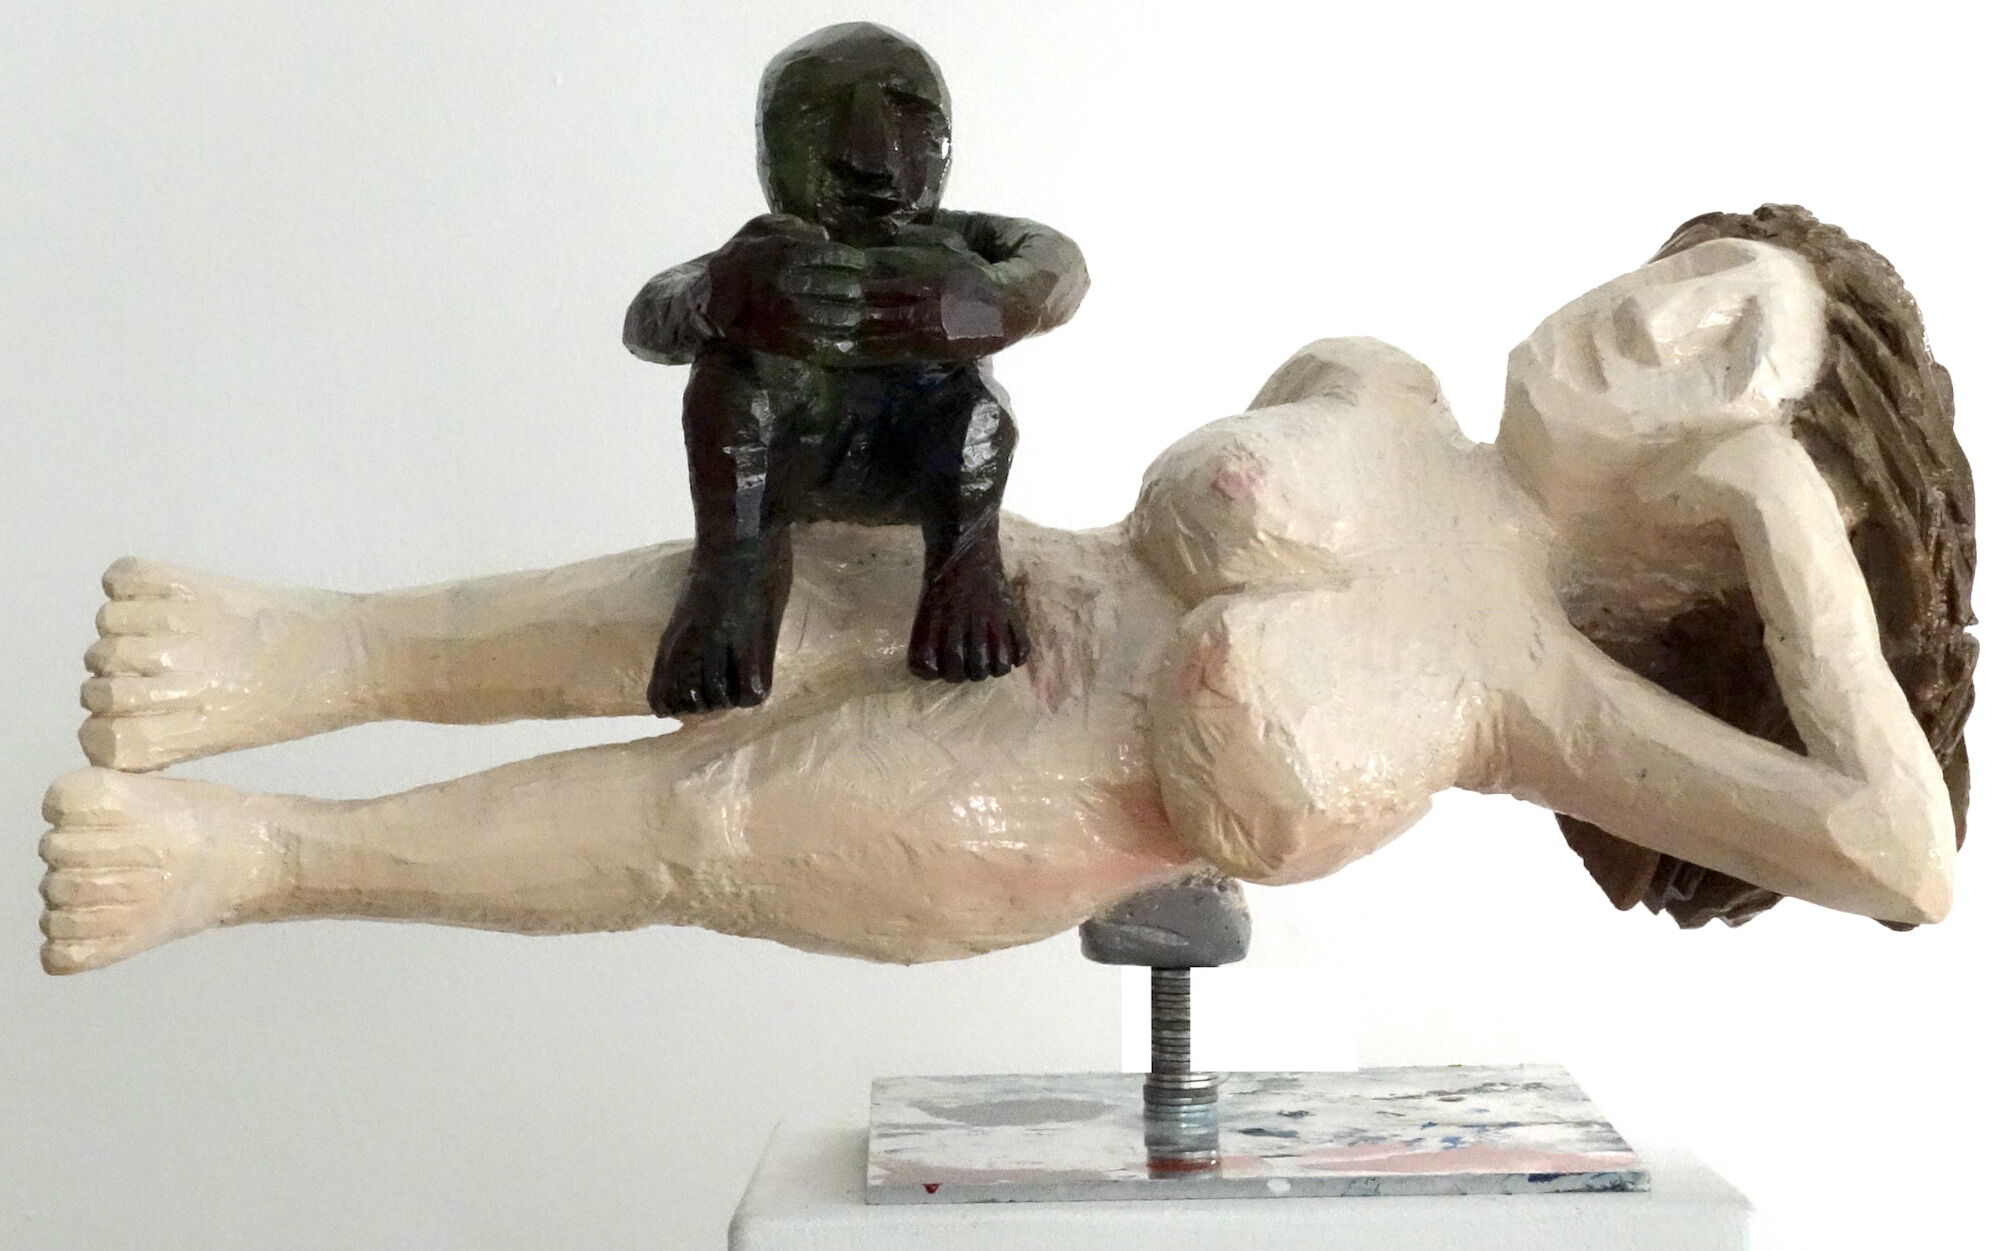 Skulptur "mand og kvinde" (2020) (Unikat), aluminium von Daniel Wagenblast